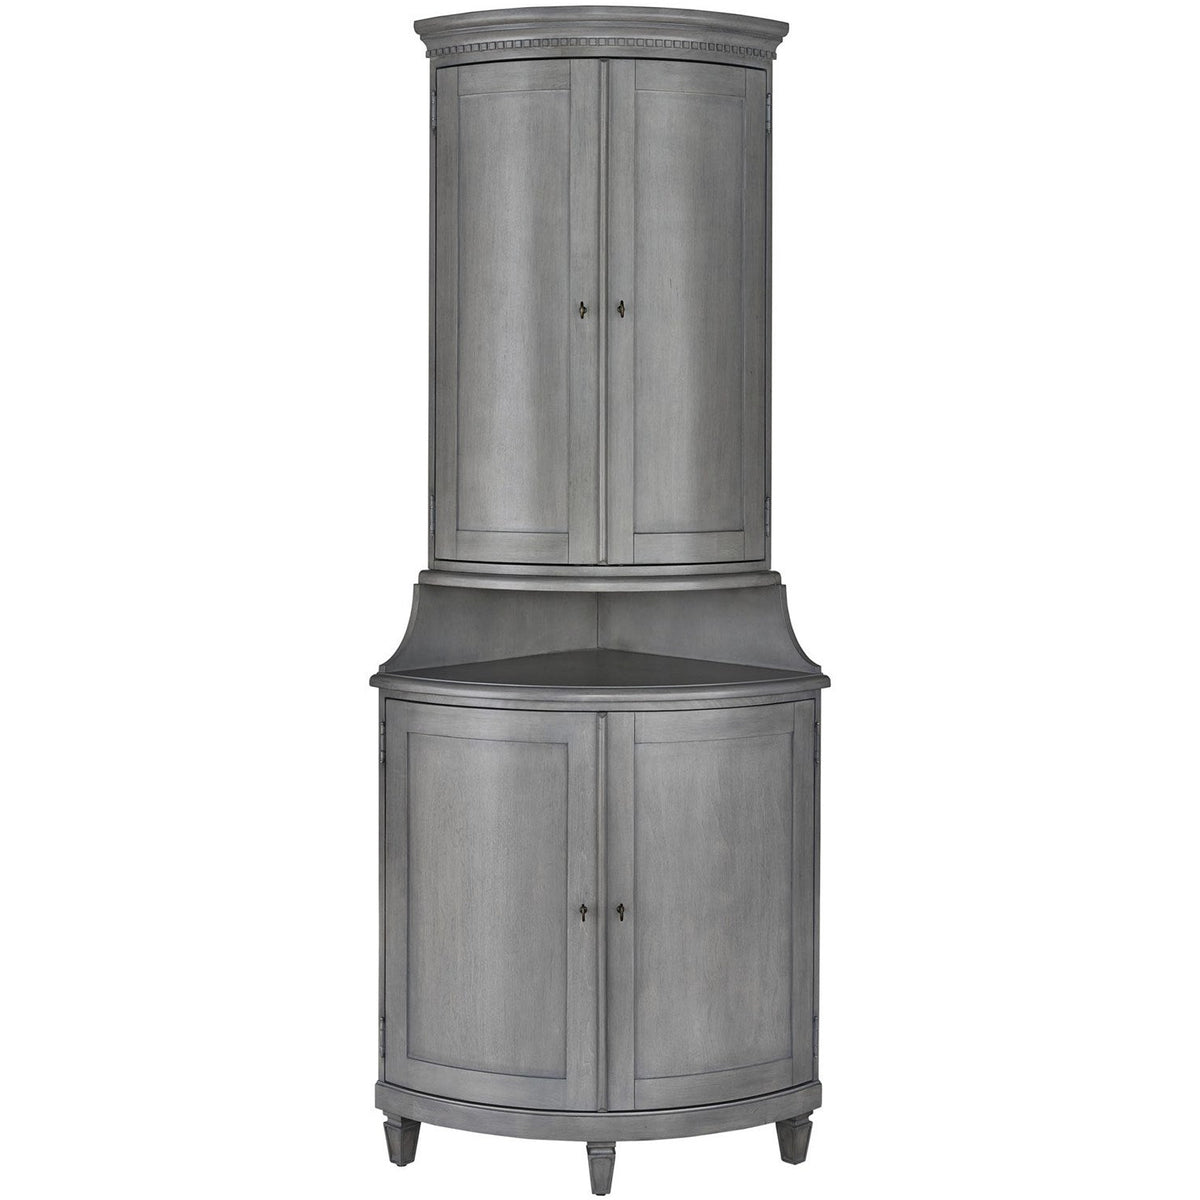 Justeene Corner Cabinet - Be Bold Furniture